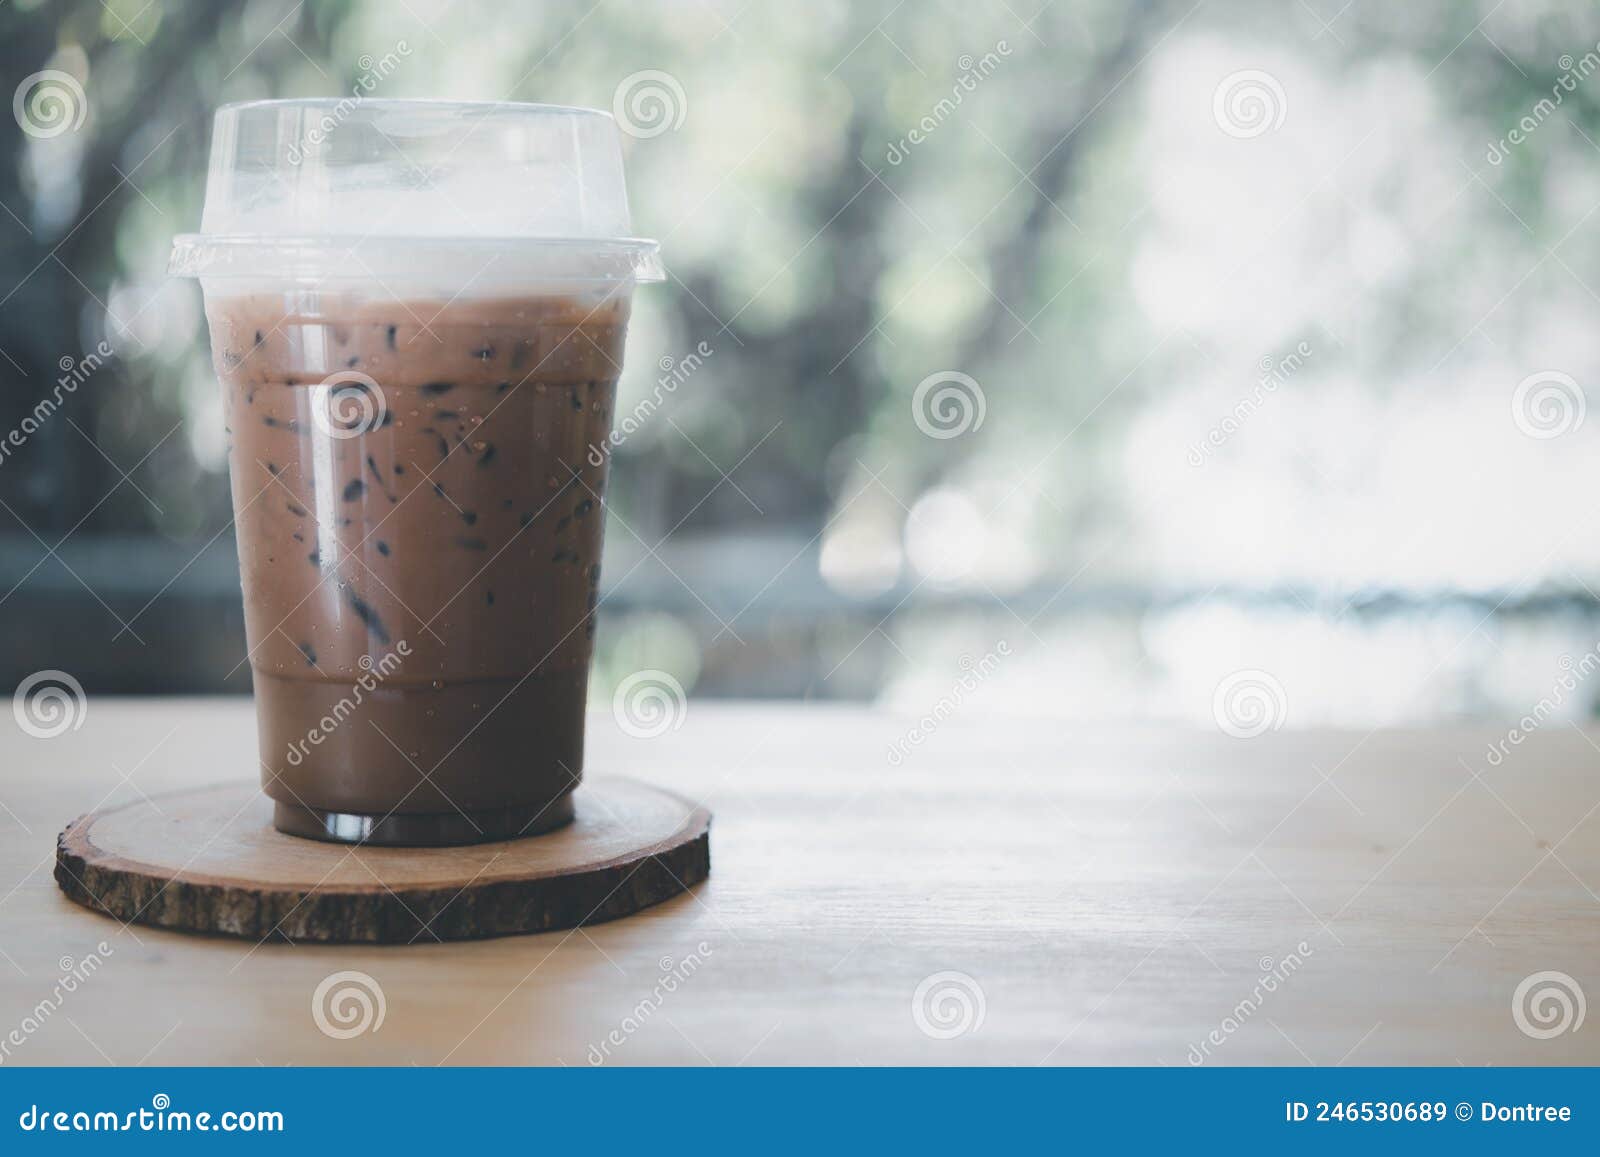 https://thumbs.dreamstime.com/z/iced-mocha-coffee-plastic-cup-milk-246530689.jpg